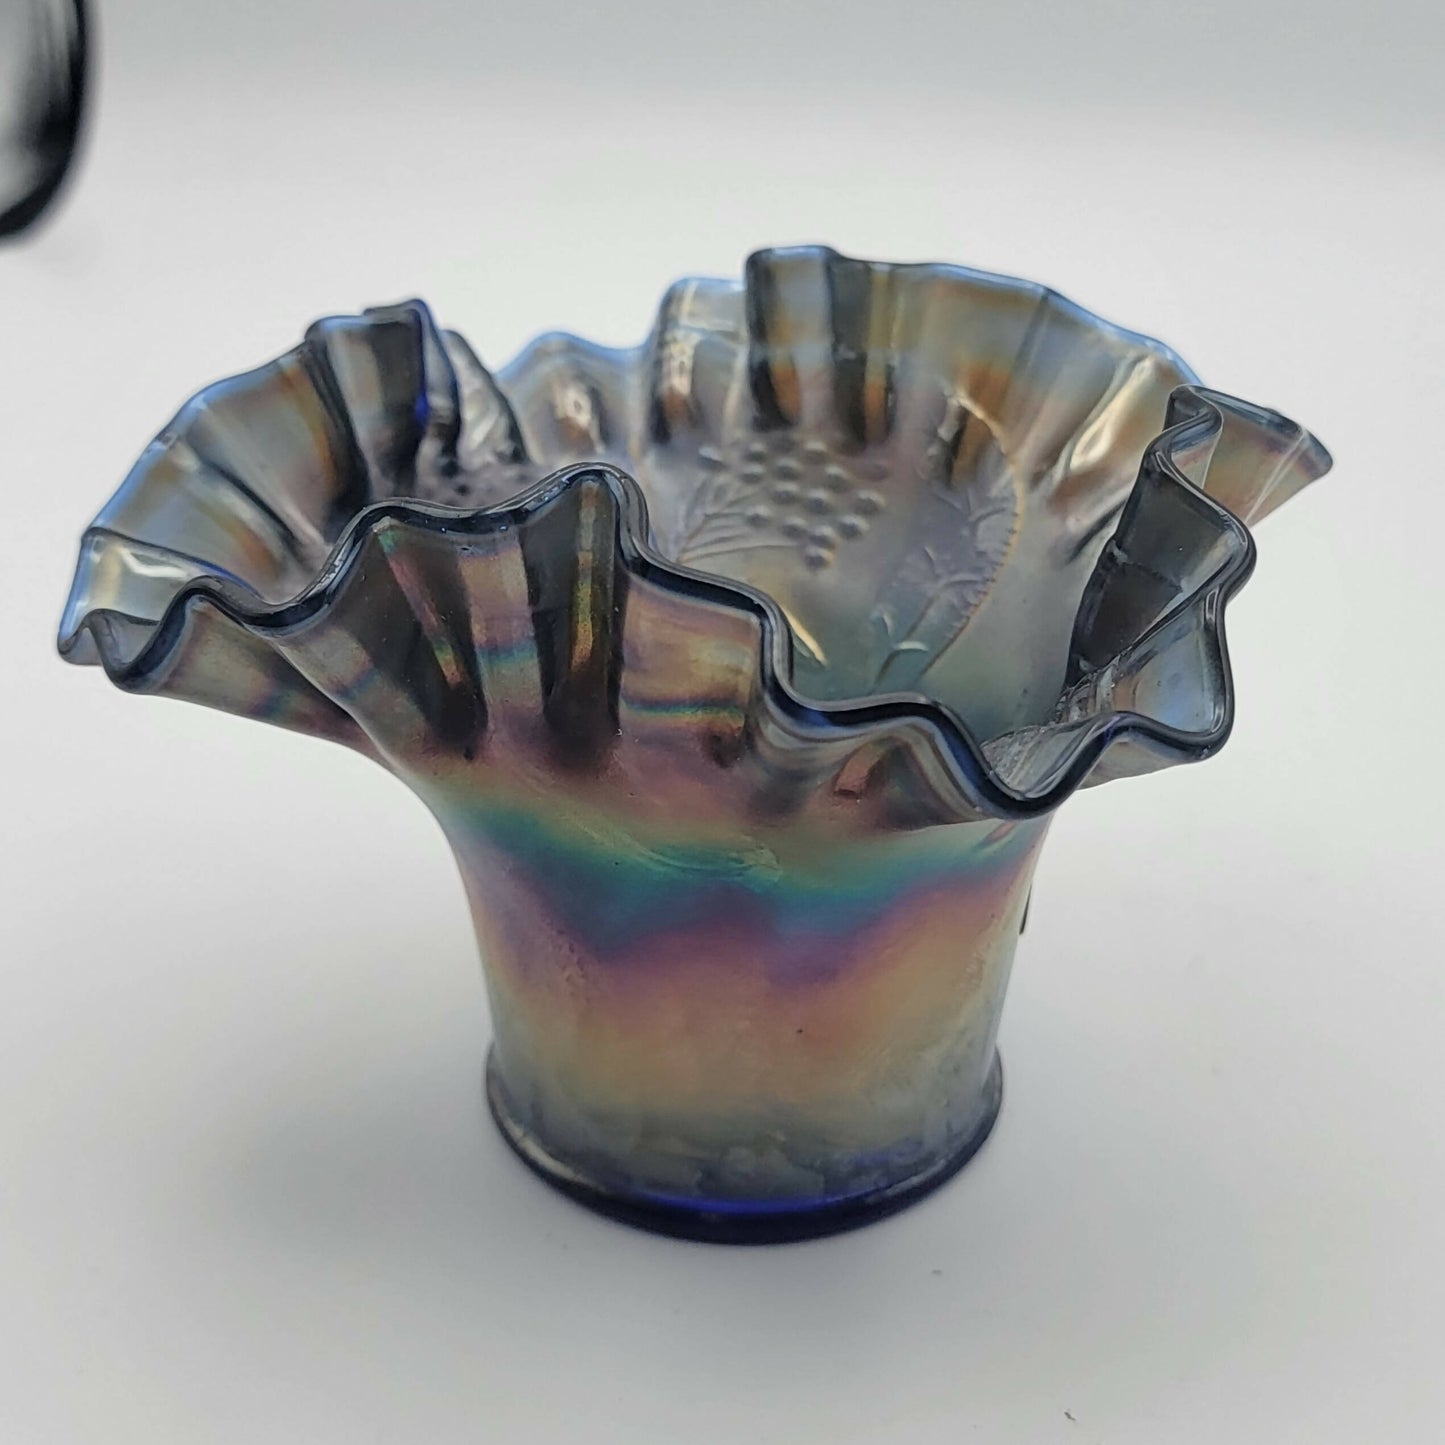 Carnival glass ruffle bowl